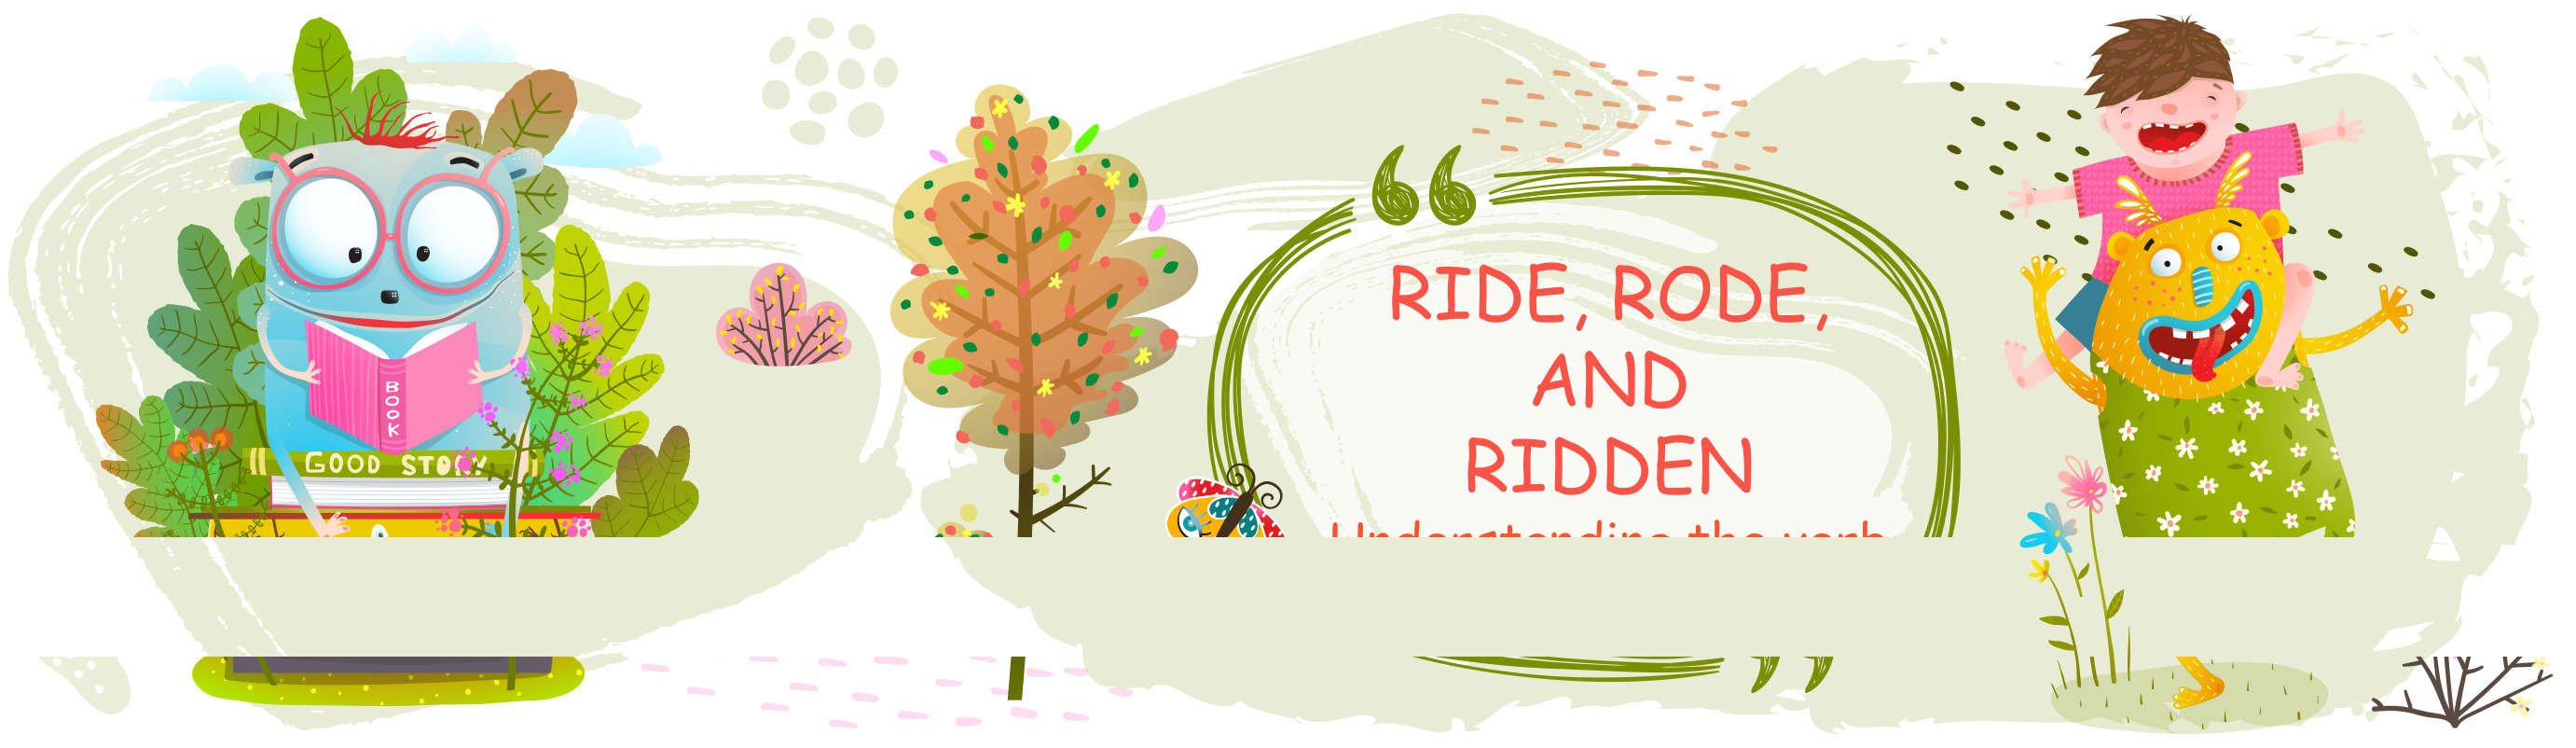 Ride Rode ridden. Be ride перевод